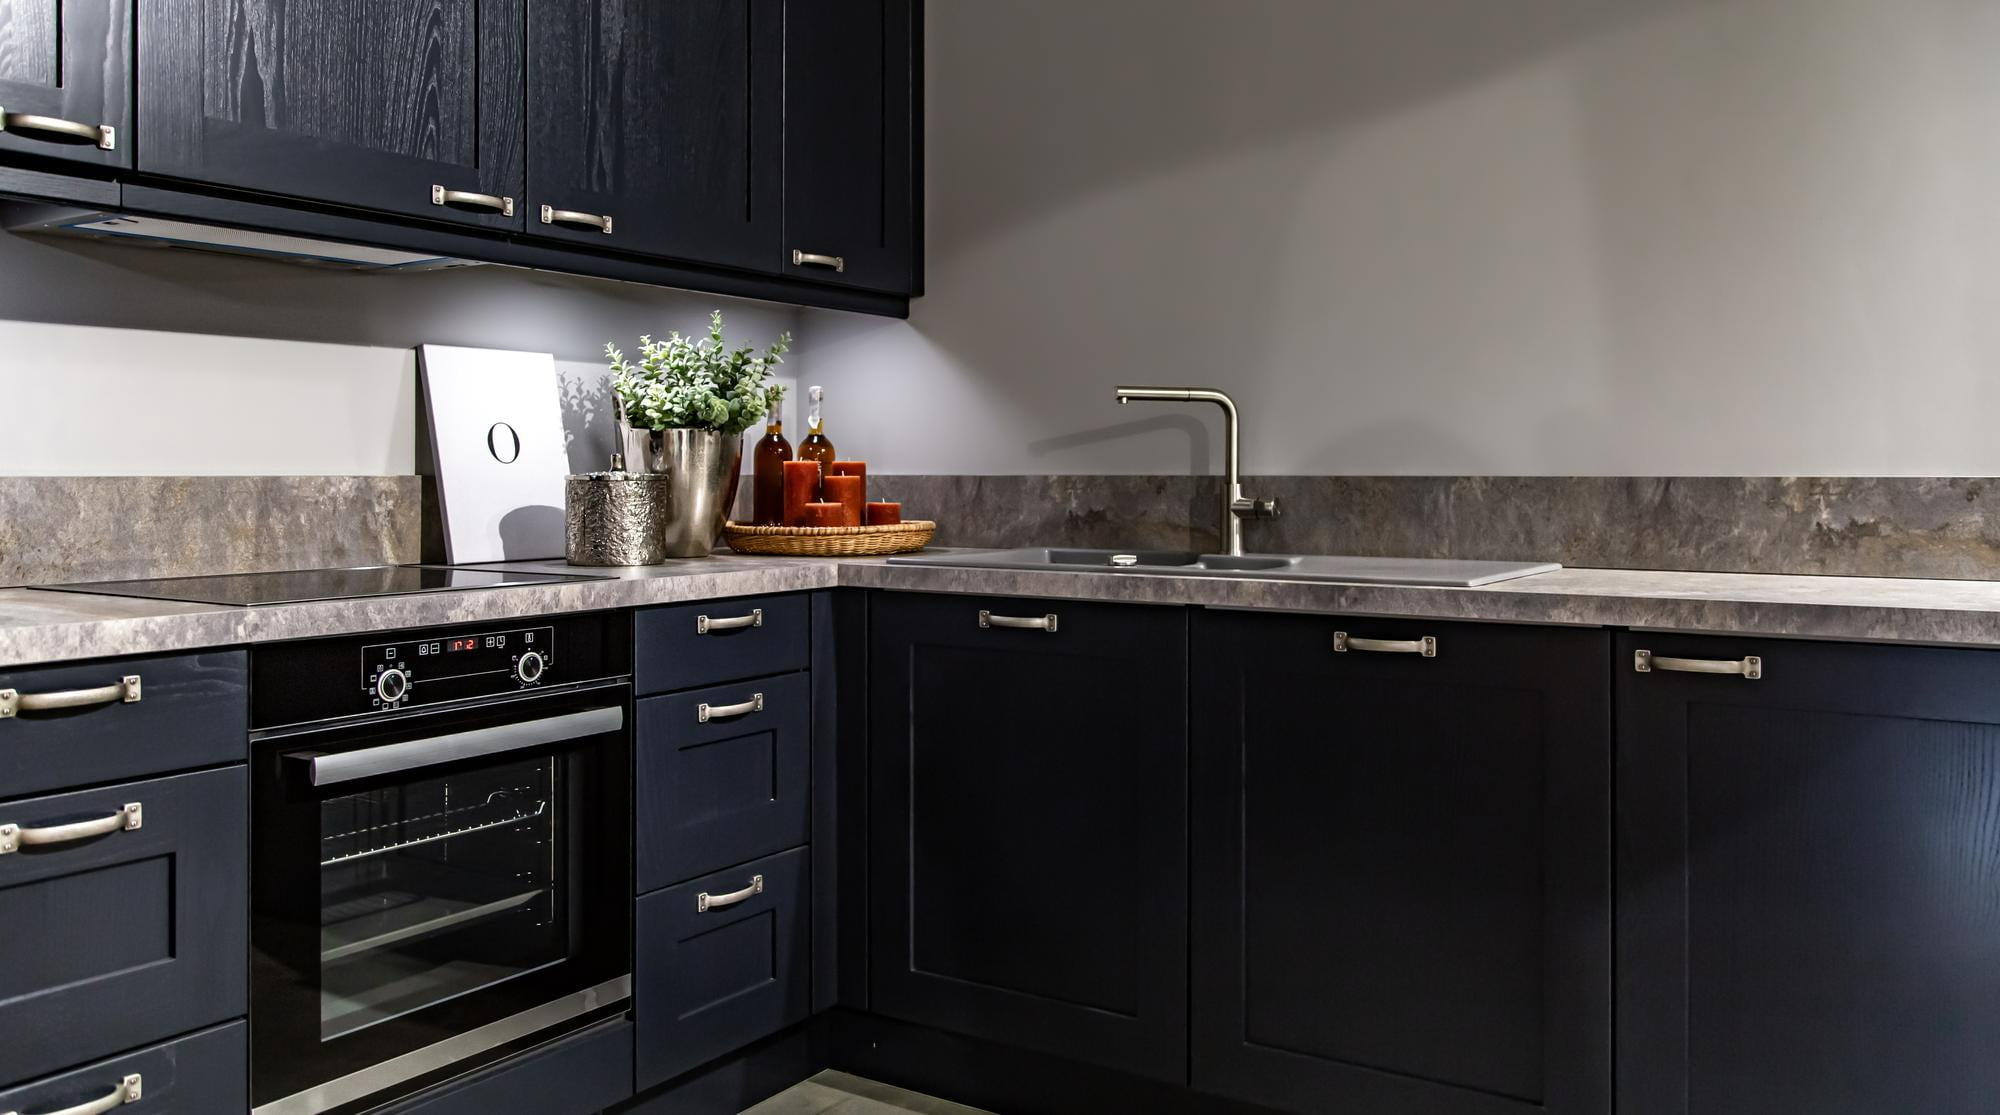 interior-kitchen-with-wooden-details-with-modern-kitchen-countertop-materials